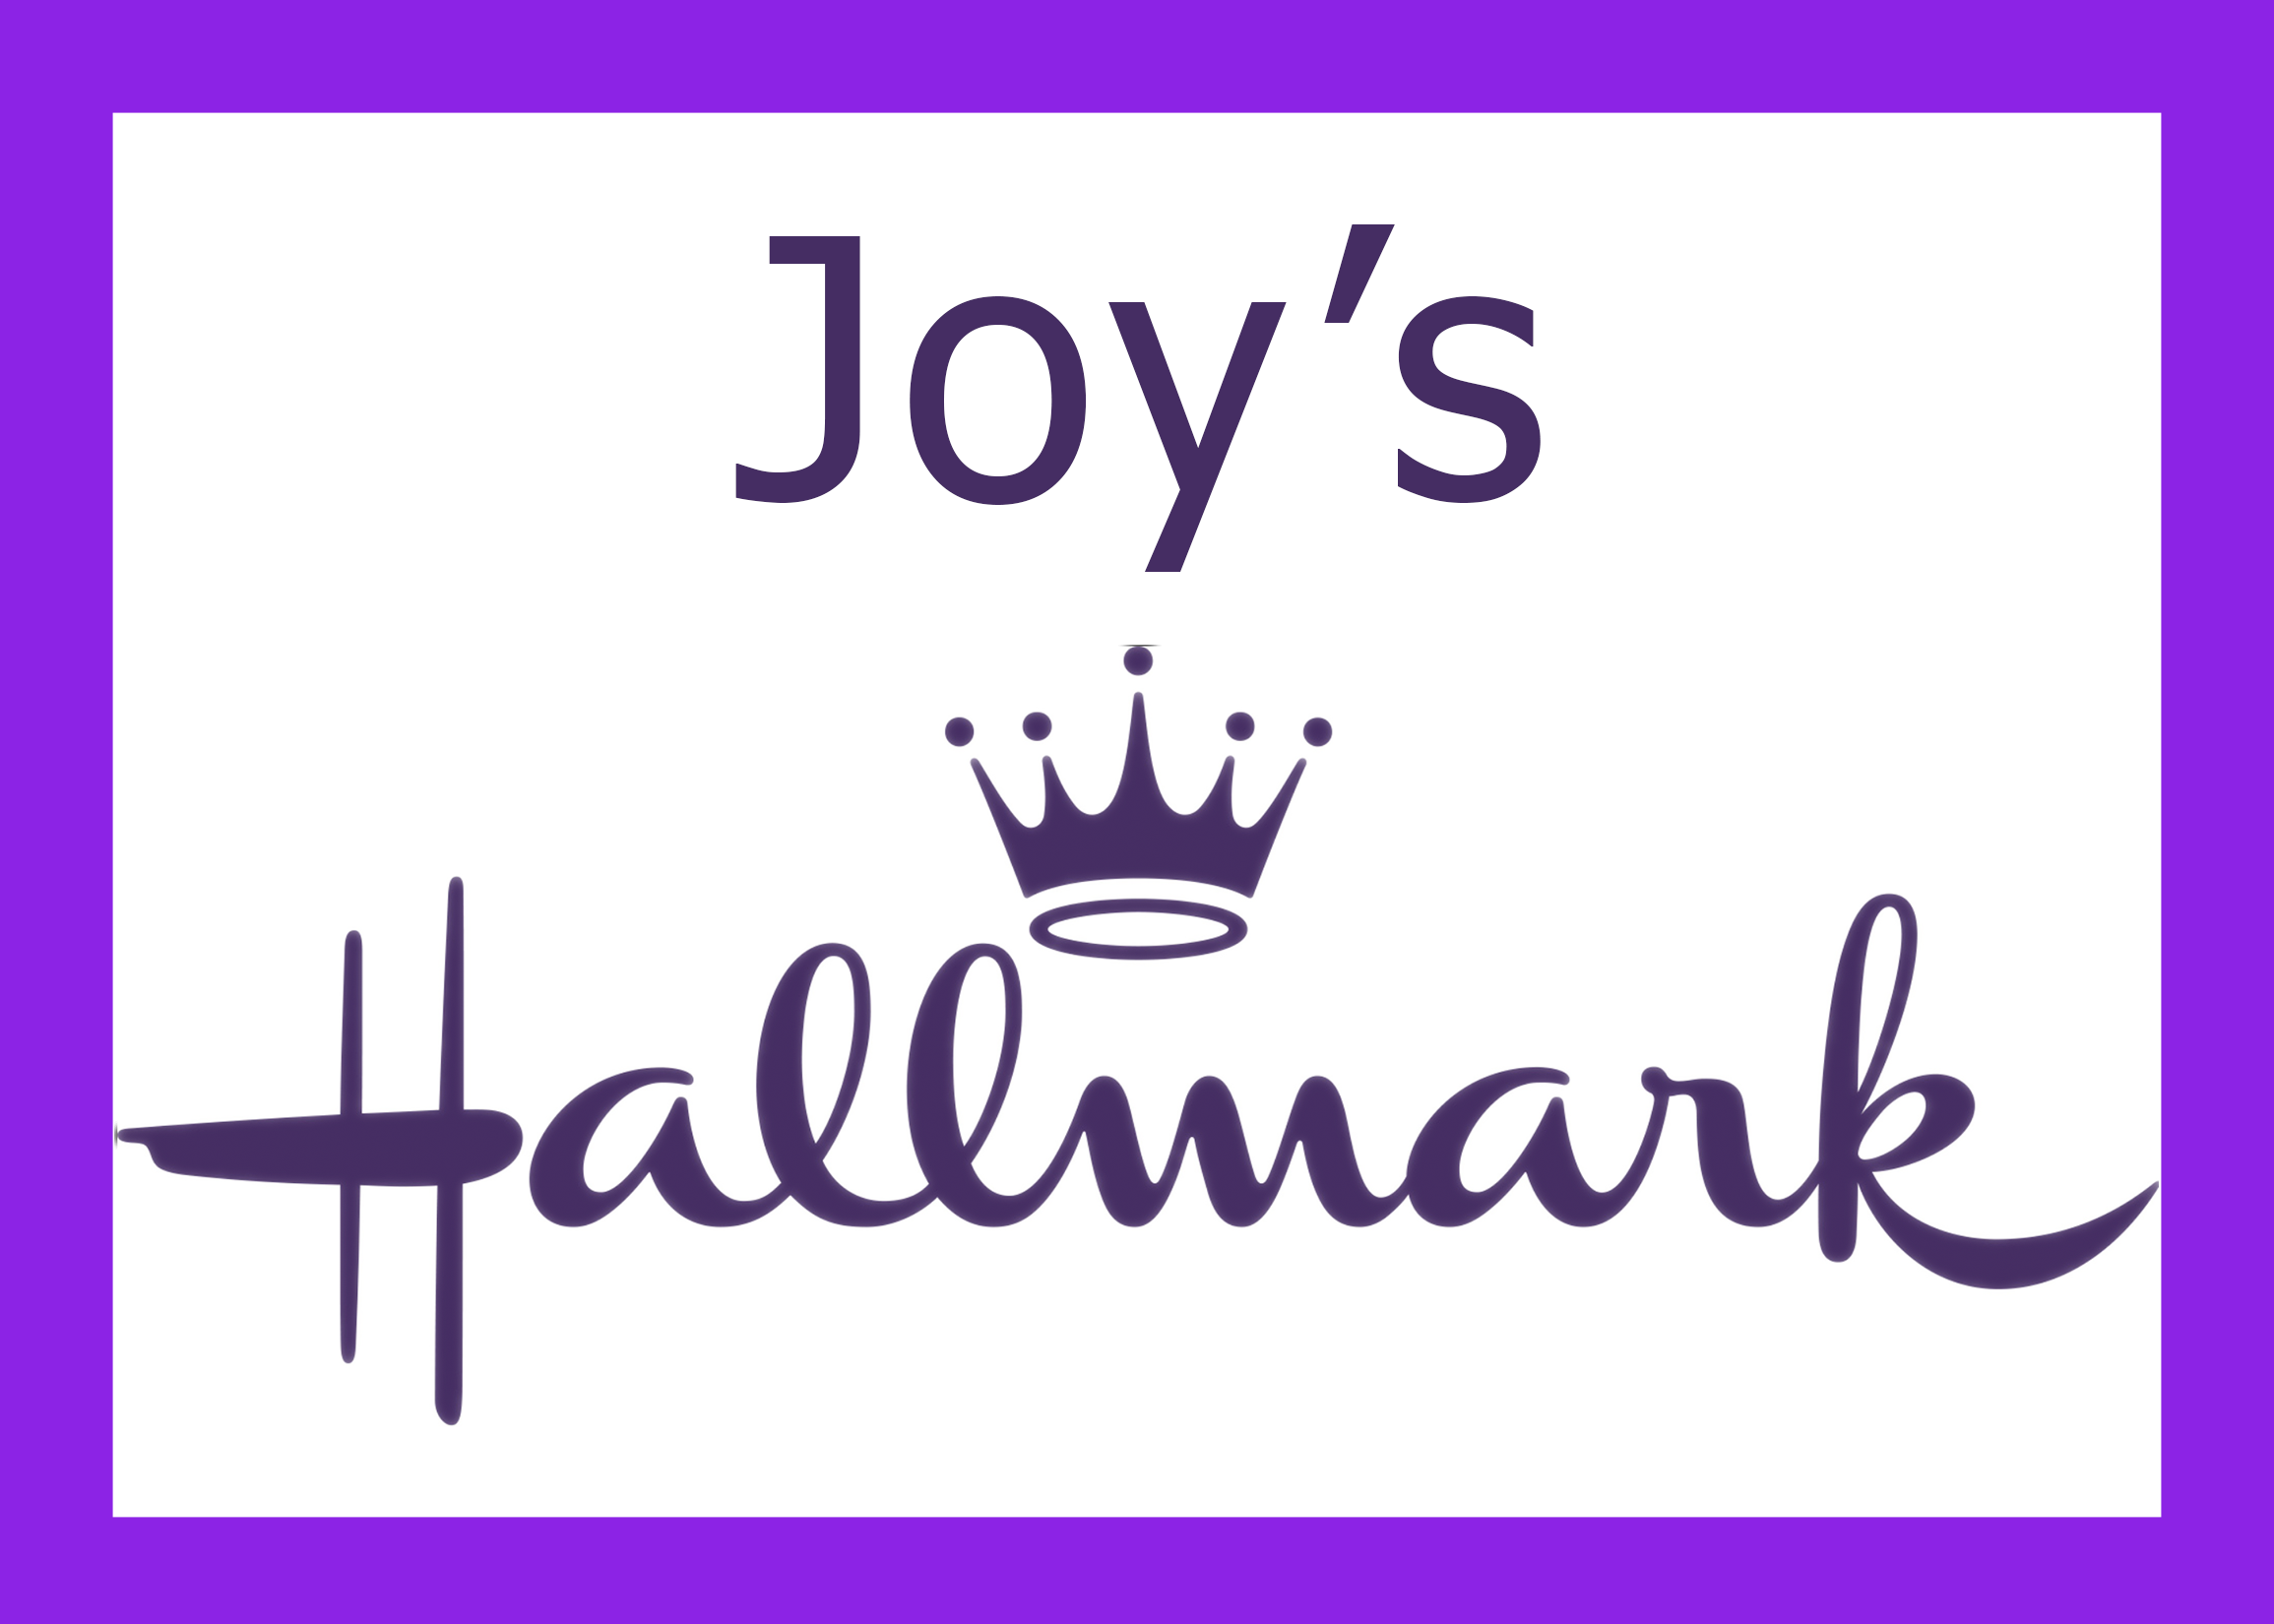 Joy's Hallmark (1).png